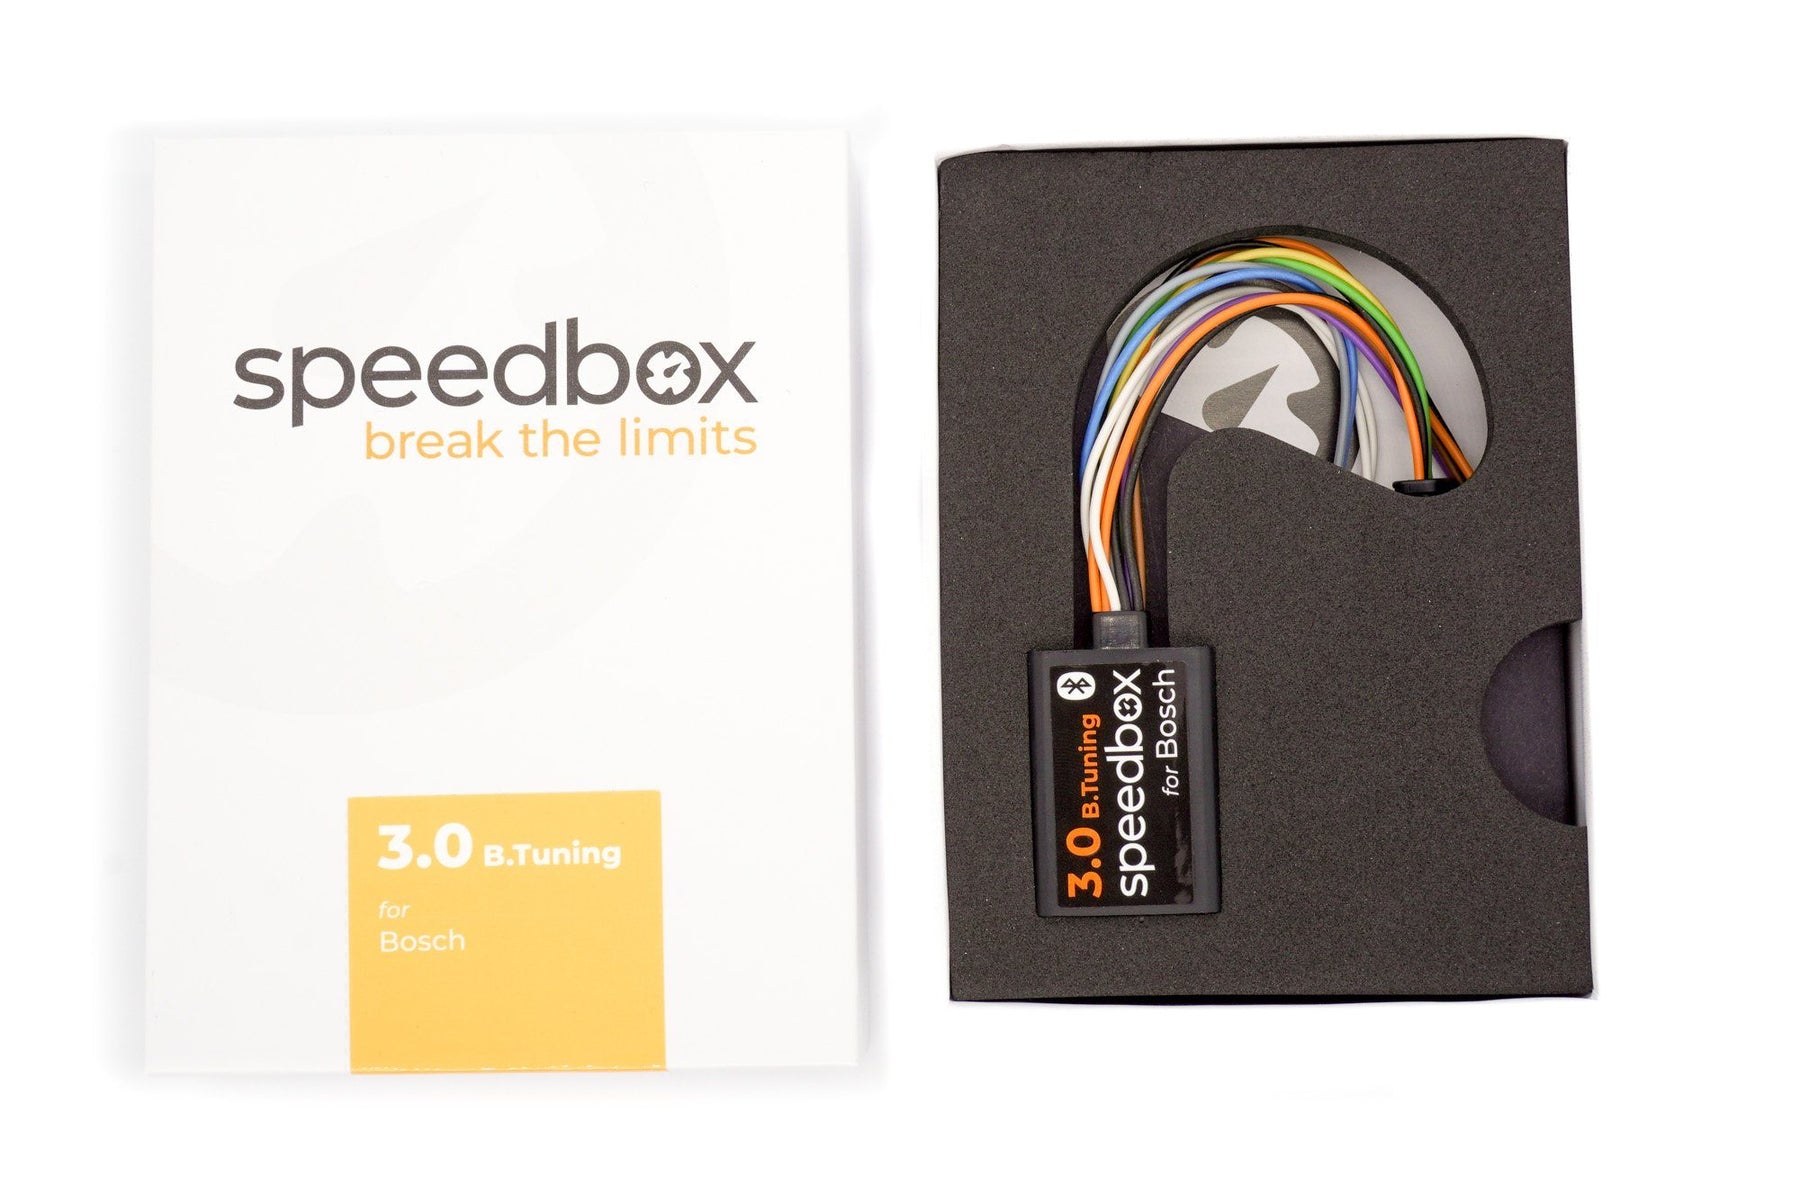 SpeedBox 3.0 B.Tuning for Bosch with crank puller